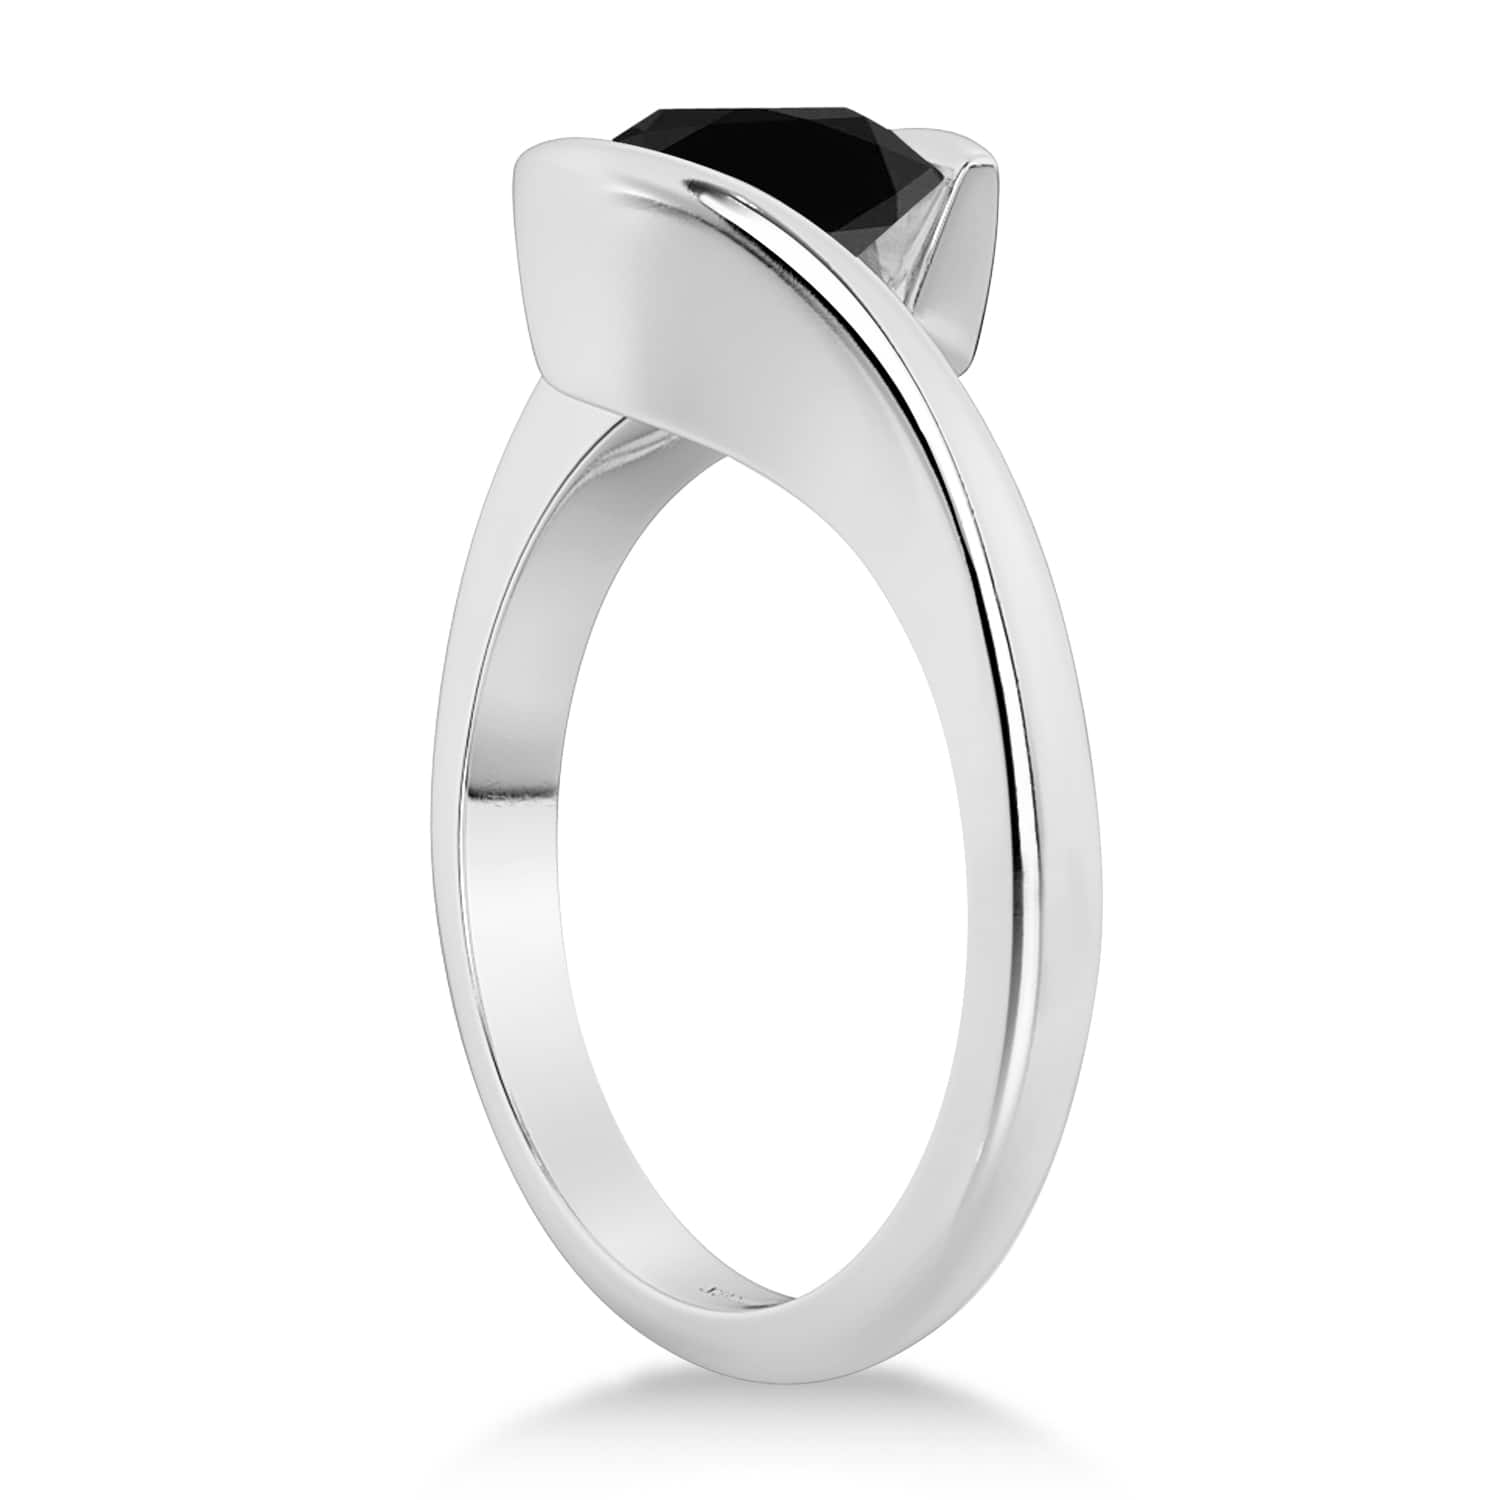 Tension Set Solitaire Black Diamond Engagement Ring 14k White Gold 1.25ct